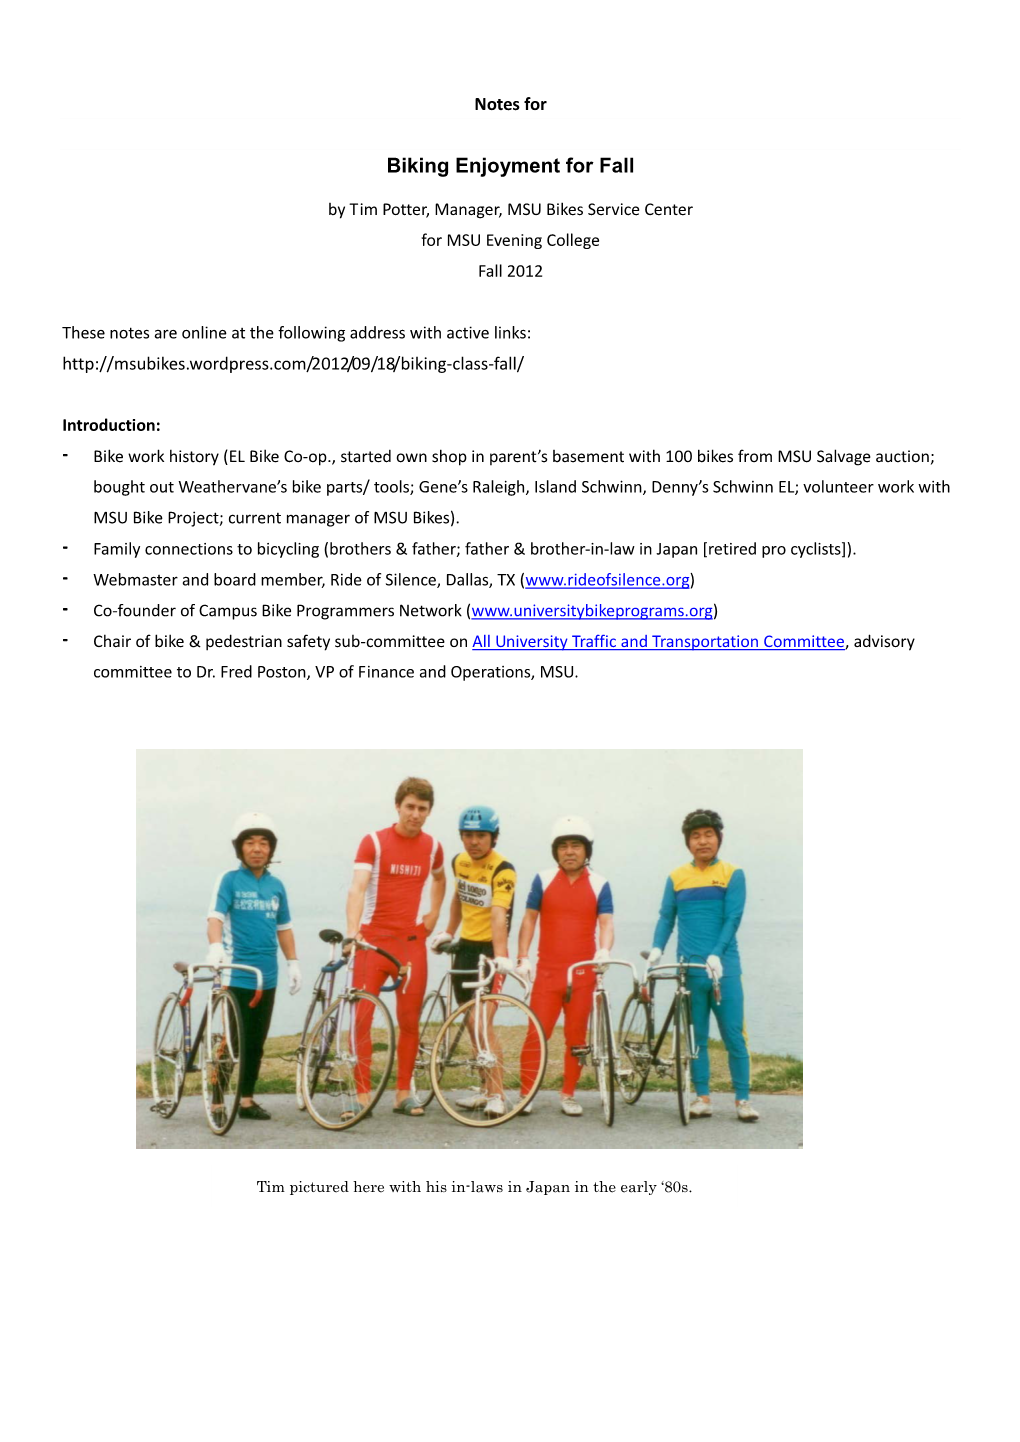 Notes for Basics of Bike Maintenance Class